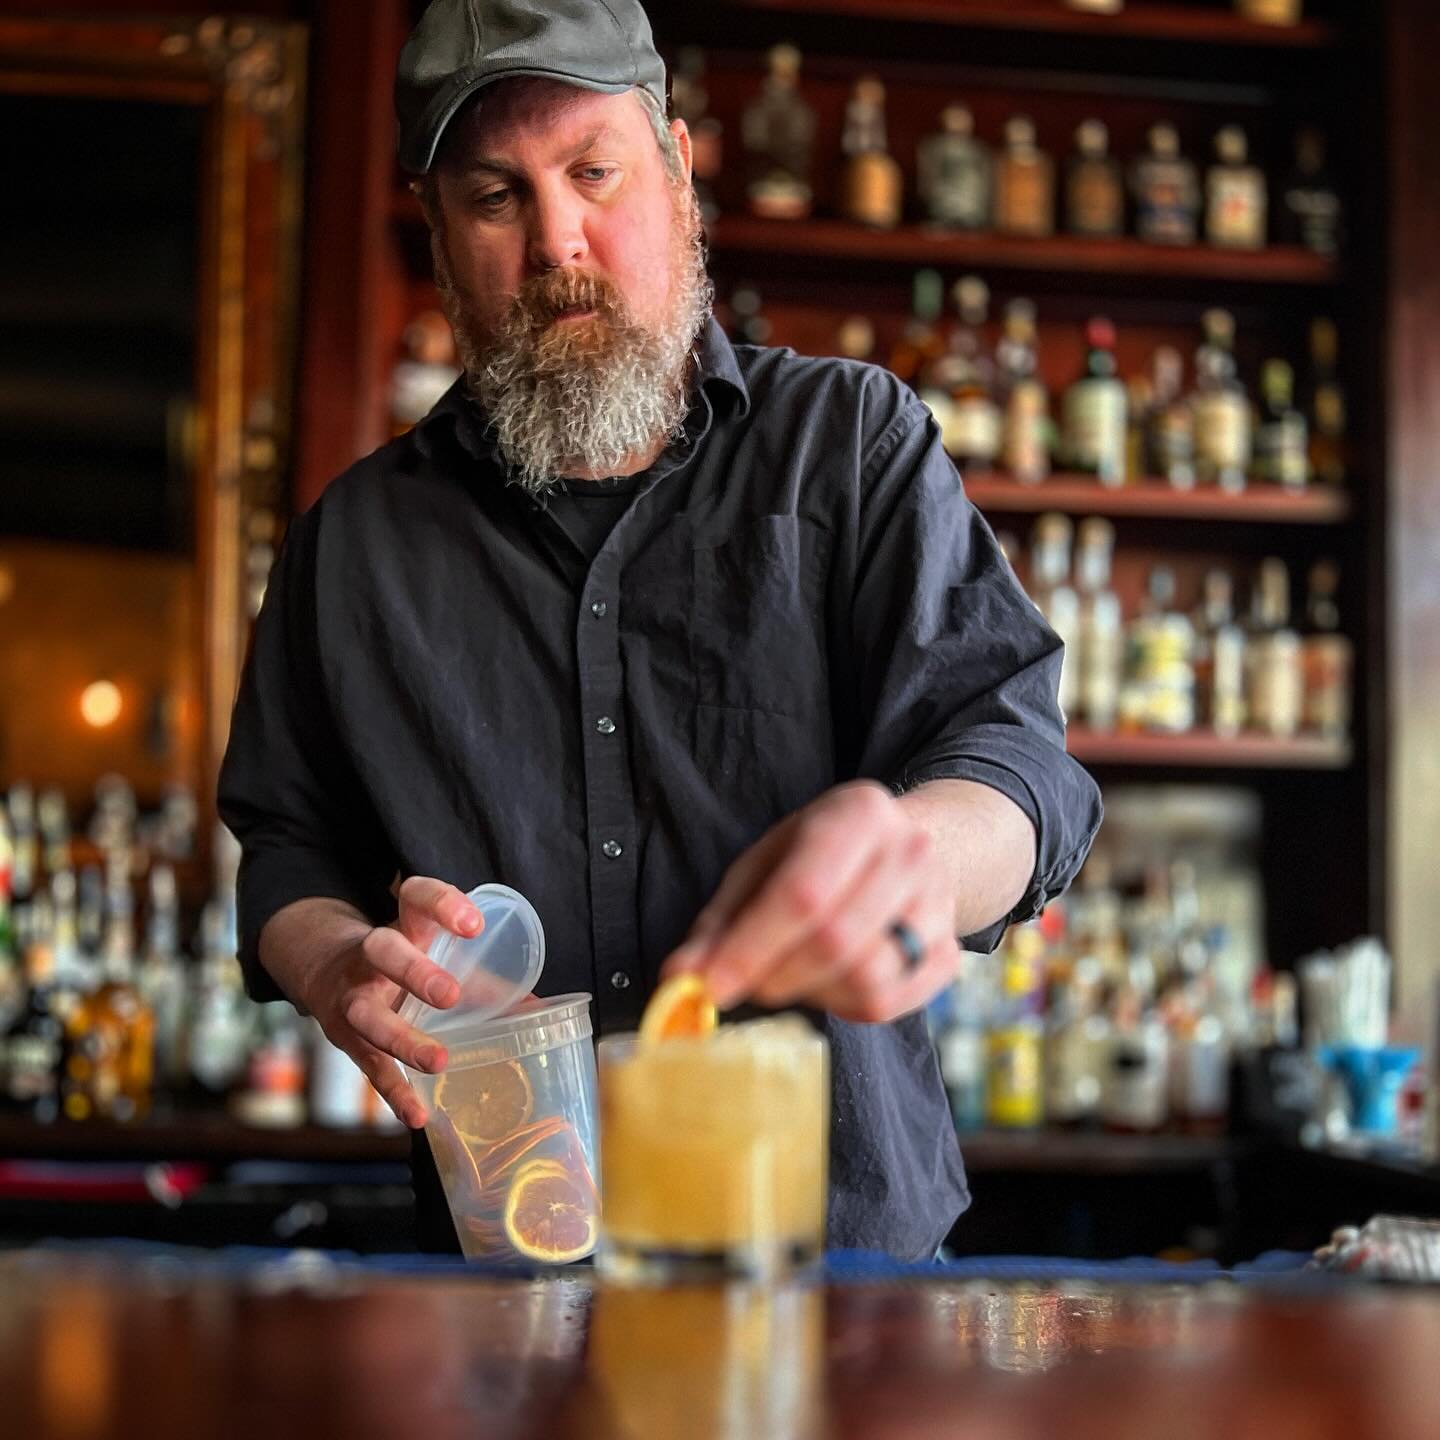 Come say hi to John at the Bar today.
-
-
-
#WashingtonsquareTavern #bartender #Brooklinebarteneder #brooklineeats